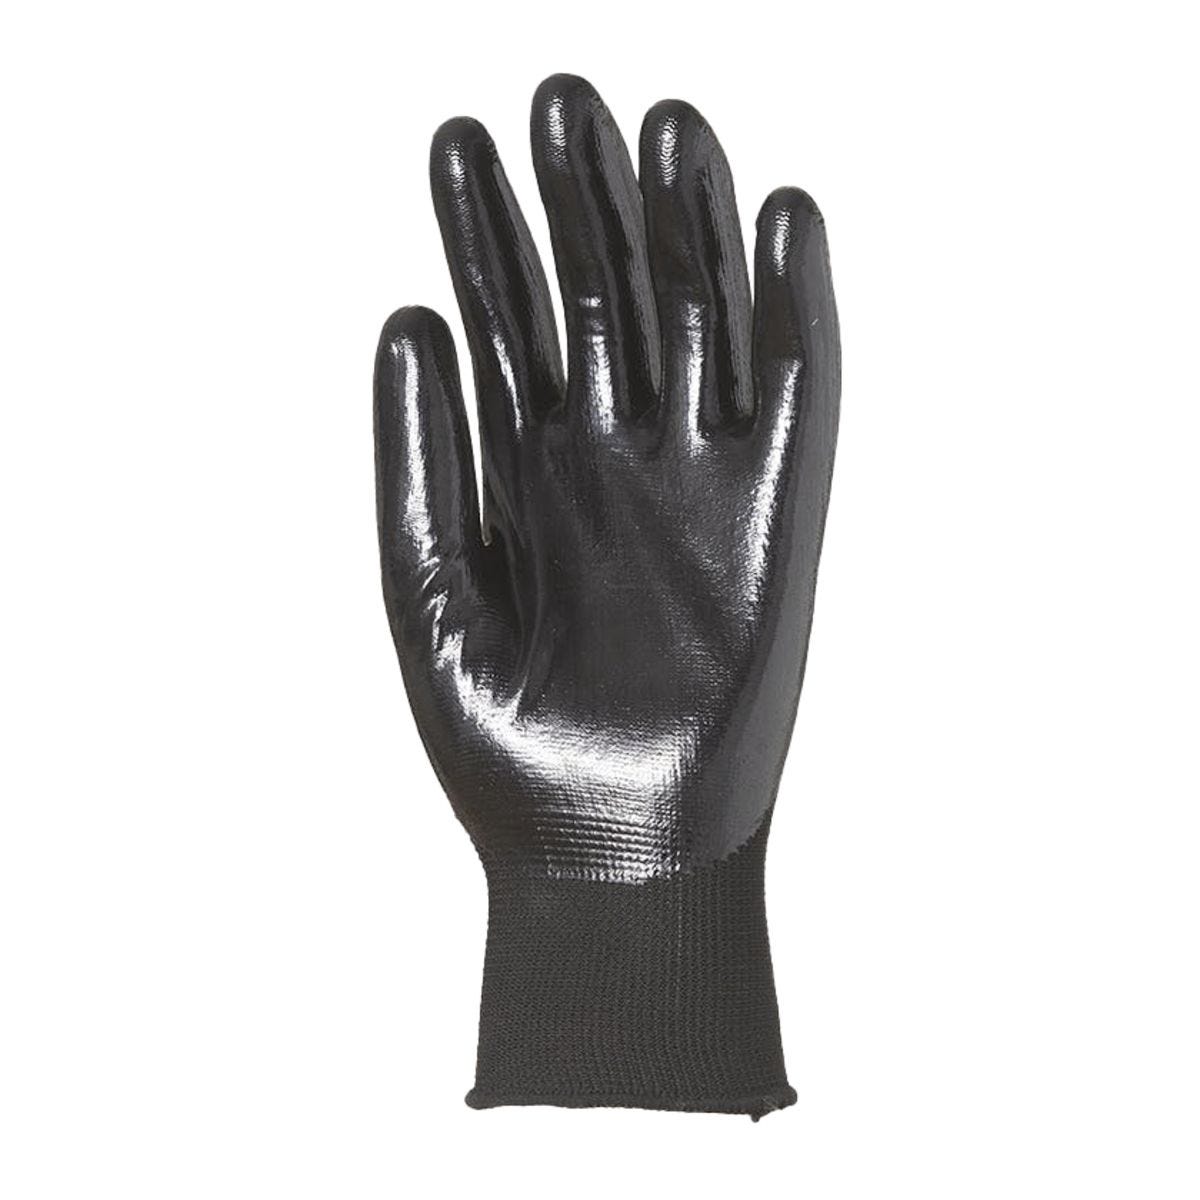 Gants polyester noir jauge 13 enduit 3/4 nitrile noir - Coverguard - Taille S-7 1